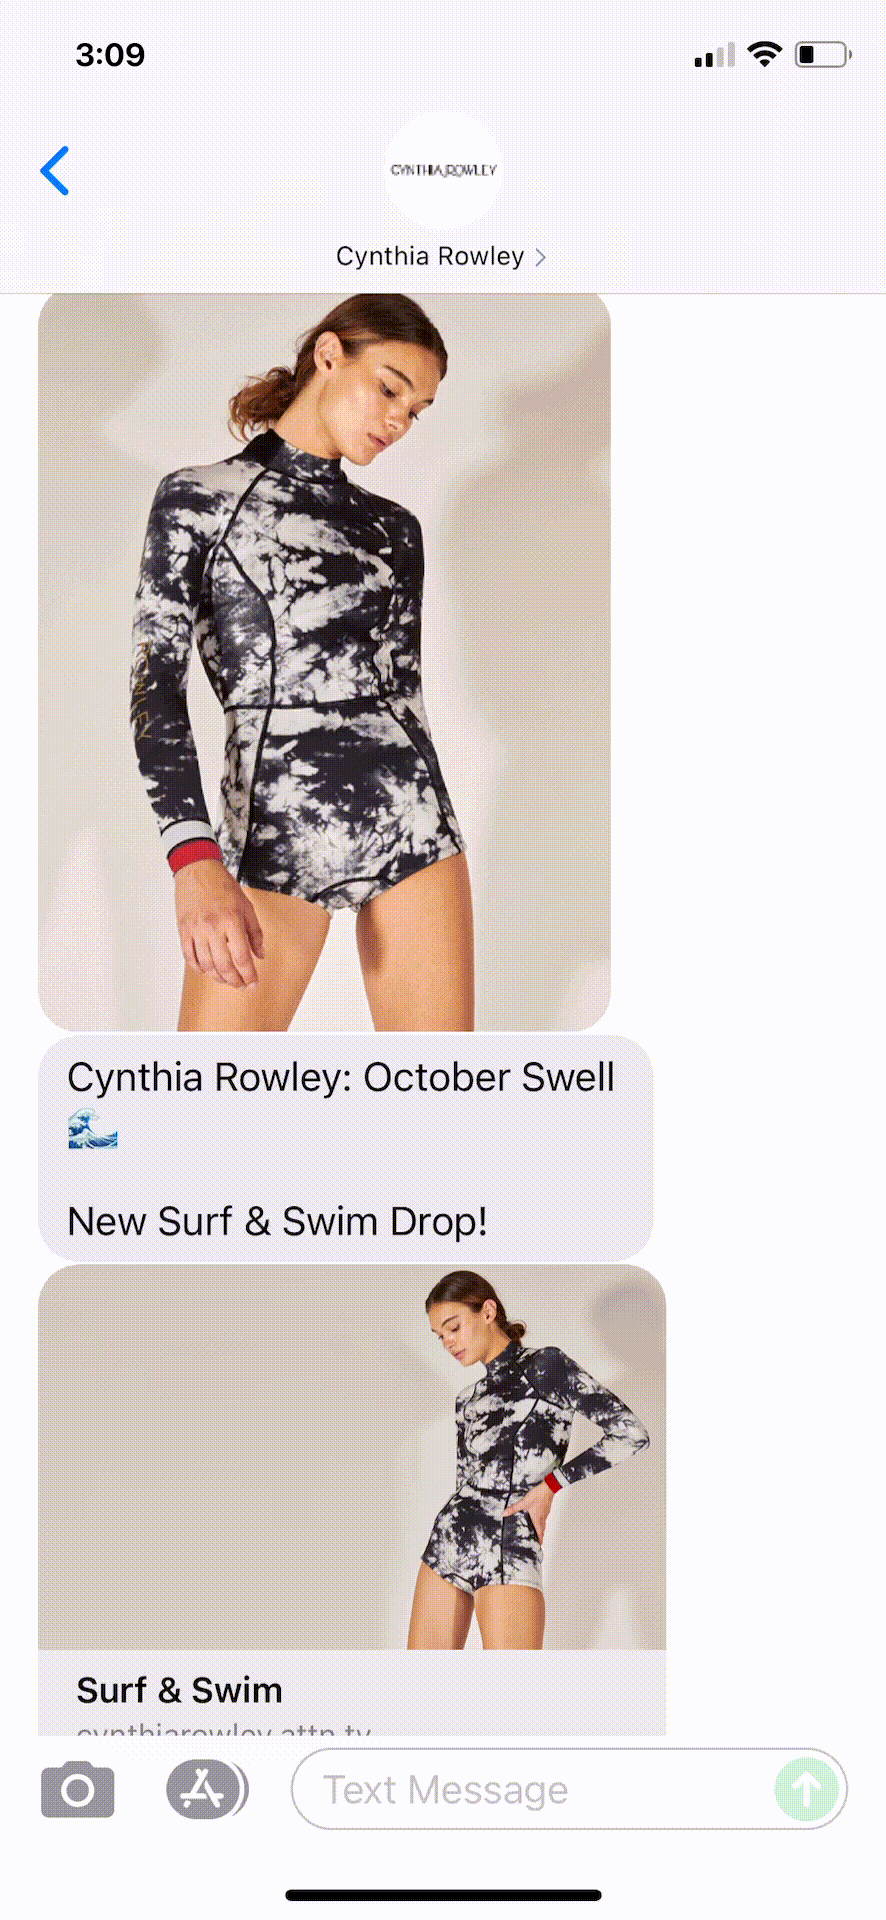 Cynthia-Rowley-Text-Message-Marketing-Example-10.13.2021